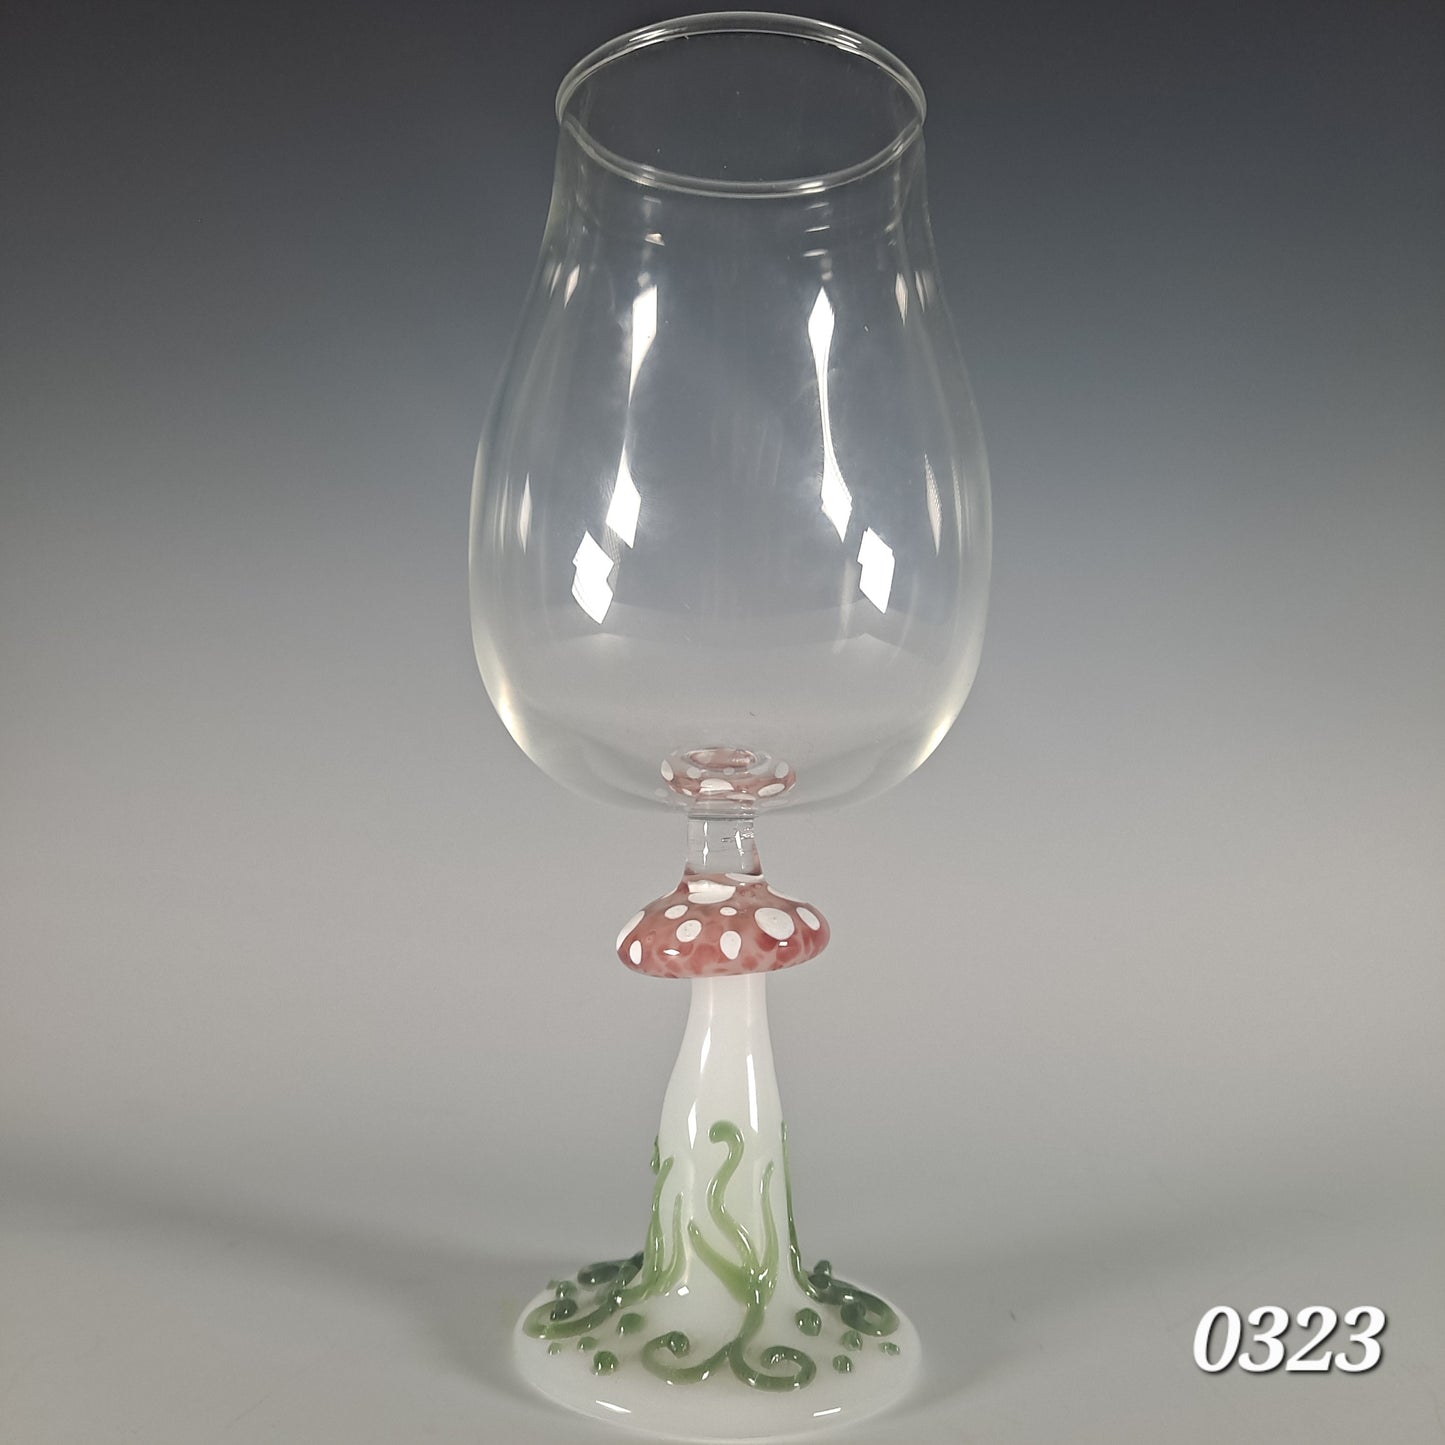 Amanita Mushroom Drinkware, Cups, Wine glasses, and Mugs